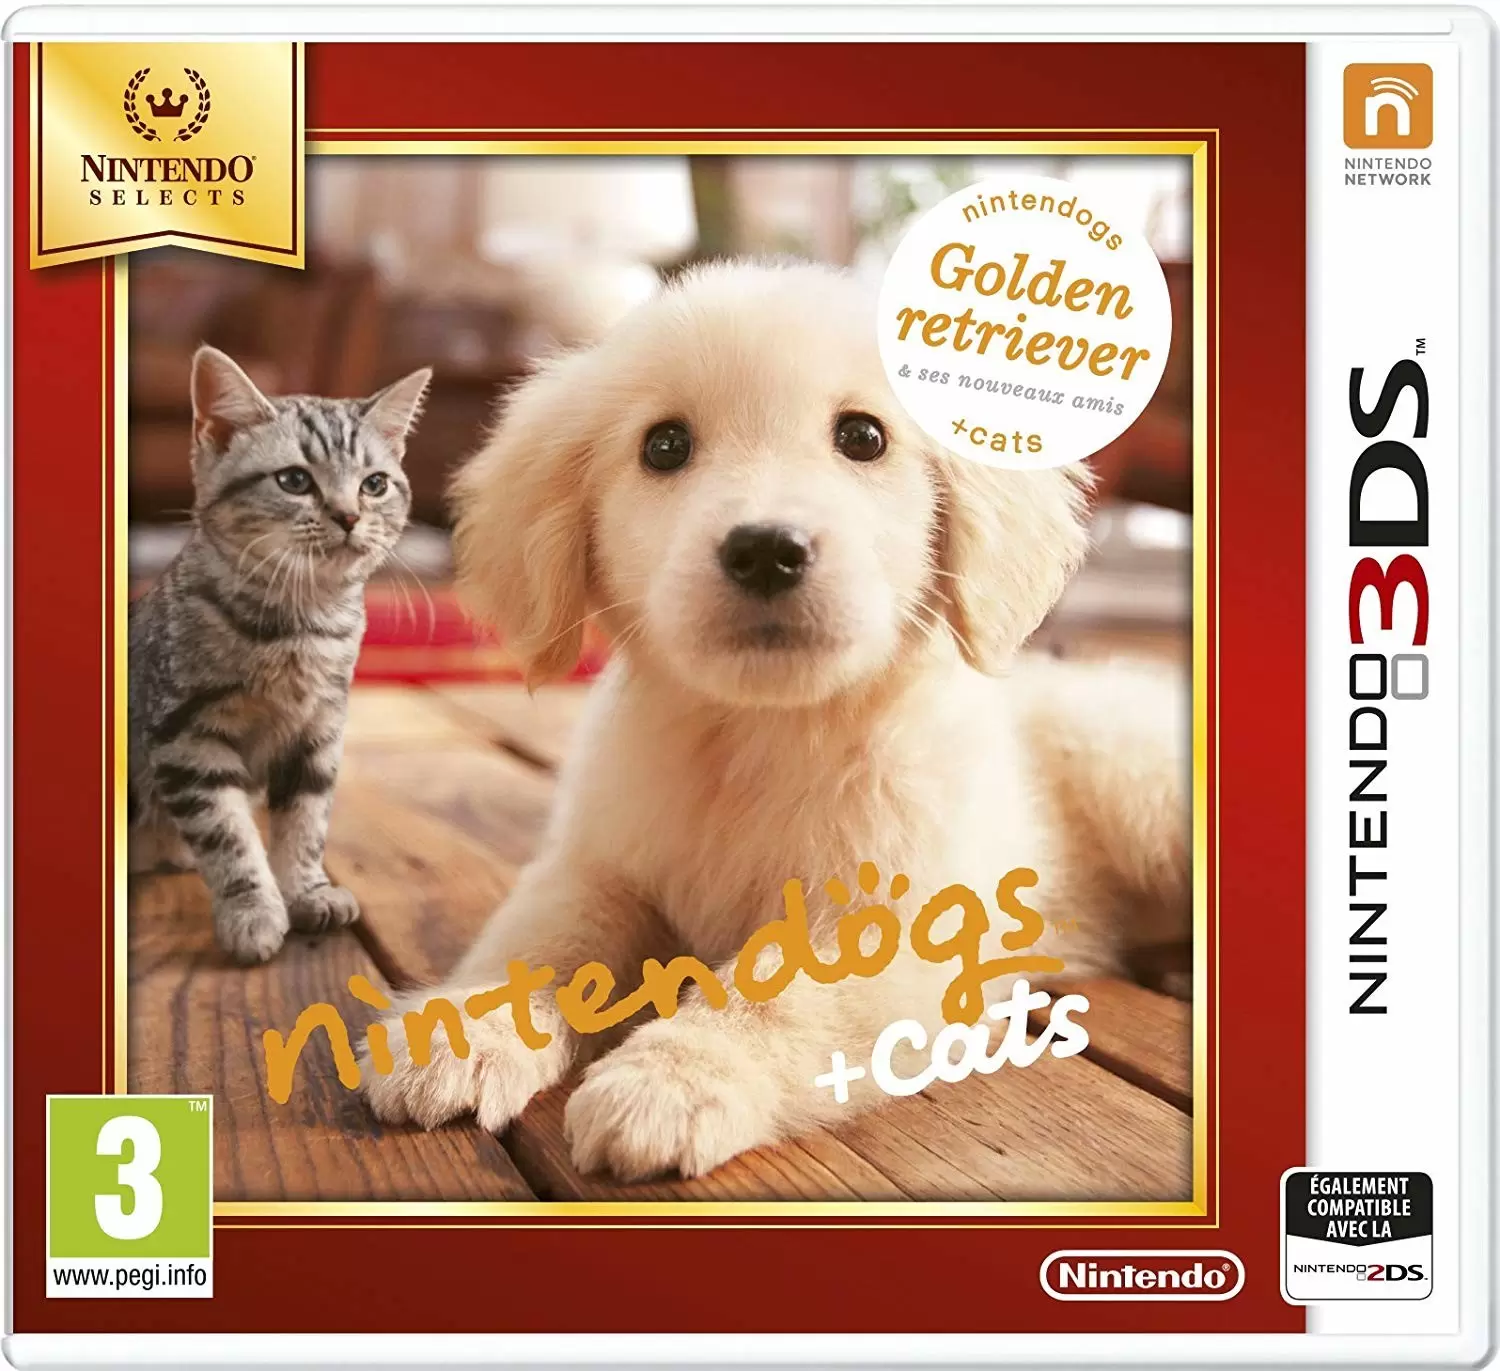 Nintendo 2DS / 3DS Games - Nintendogs Retriever + Cats (Nintendo Selects)